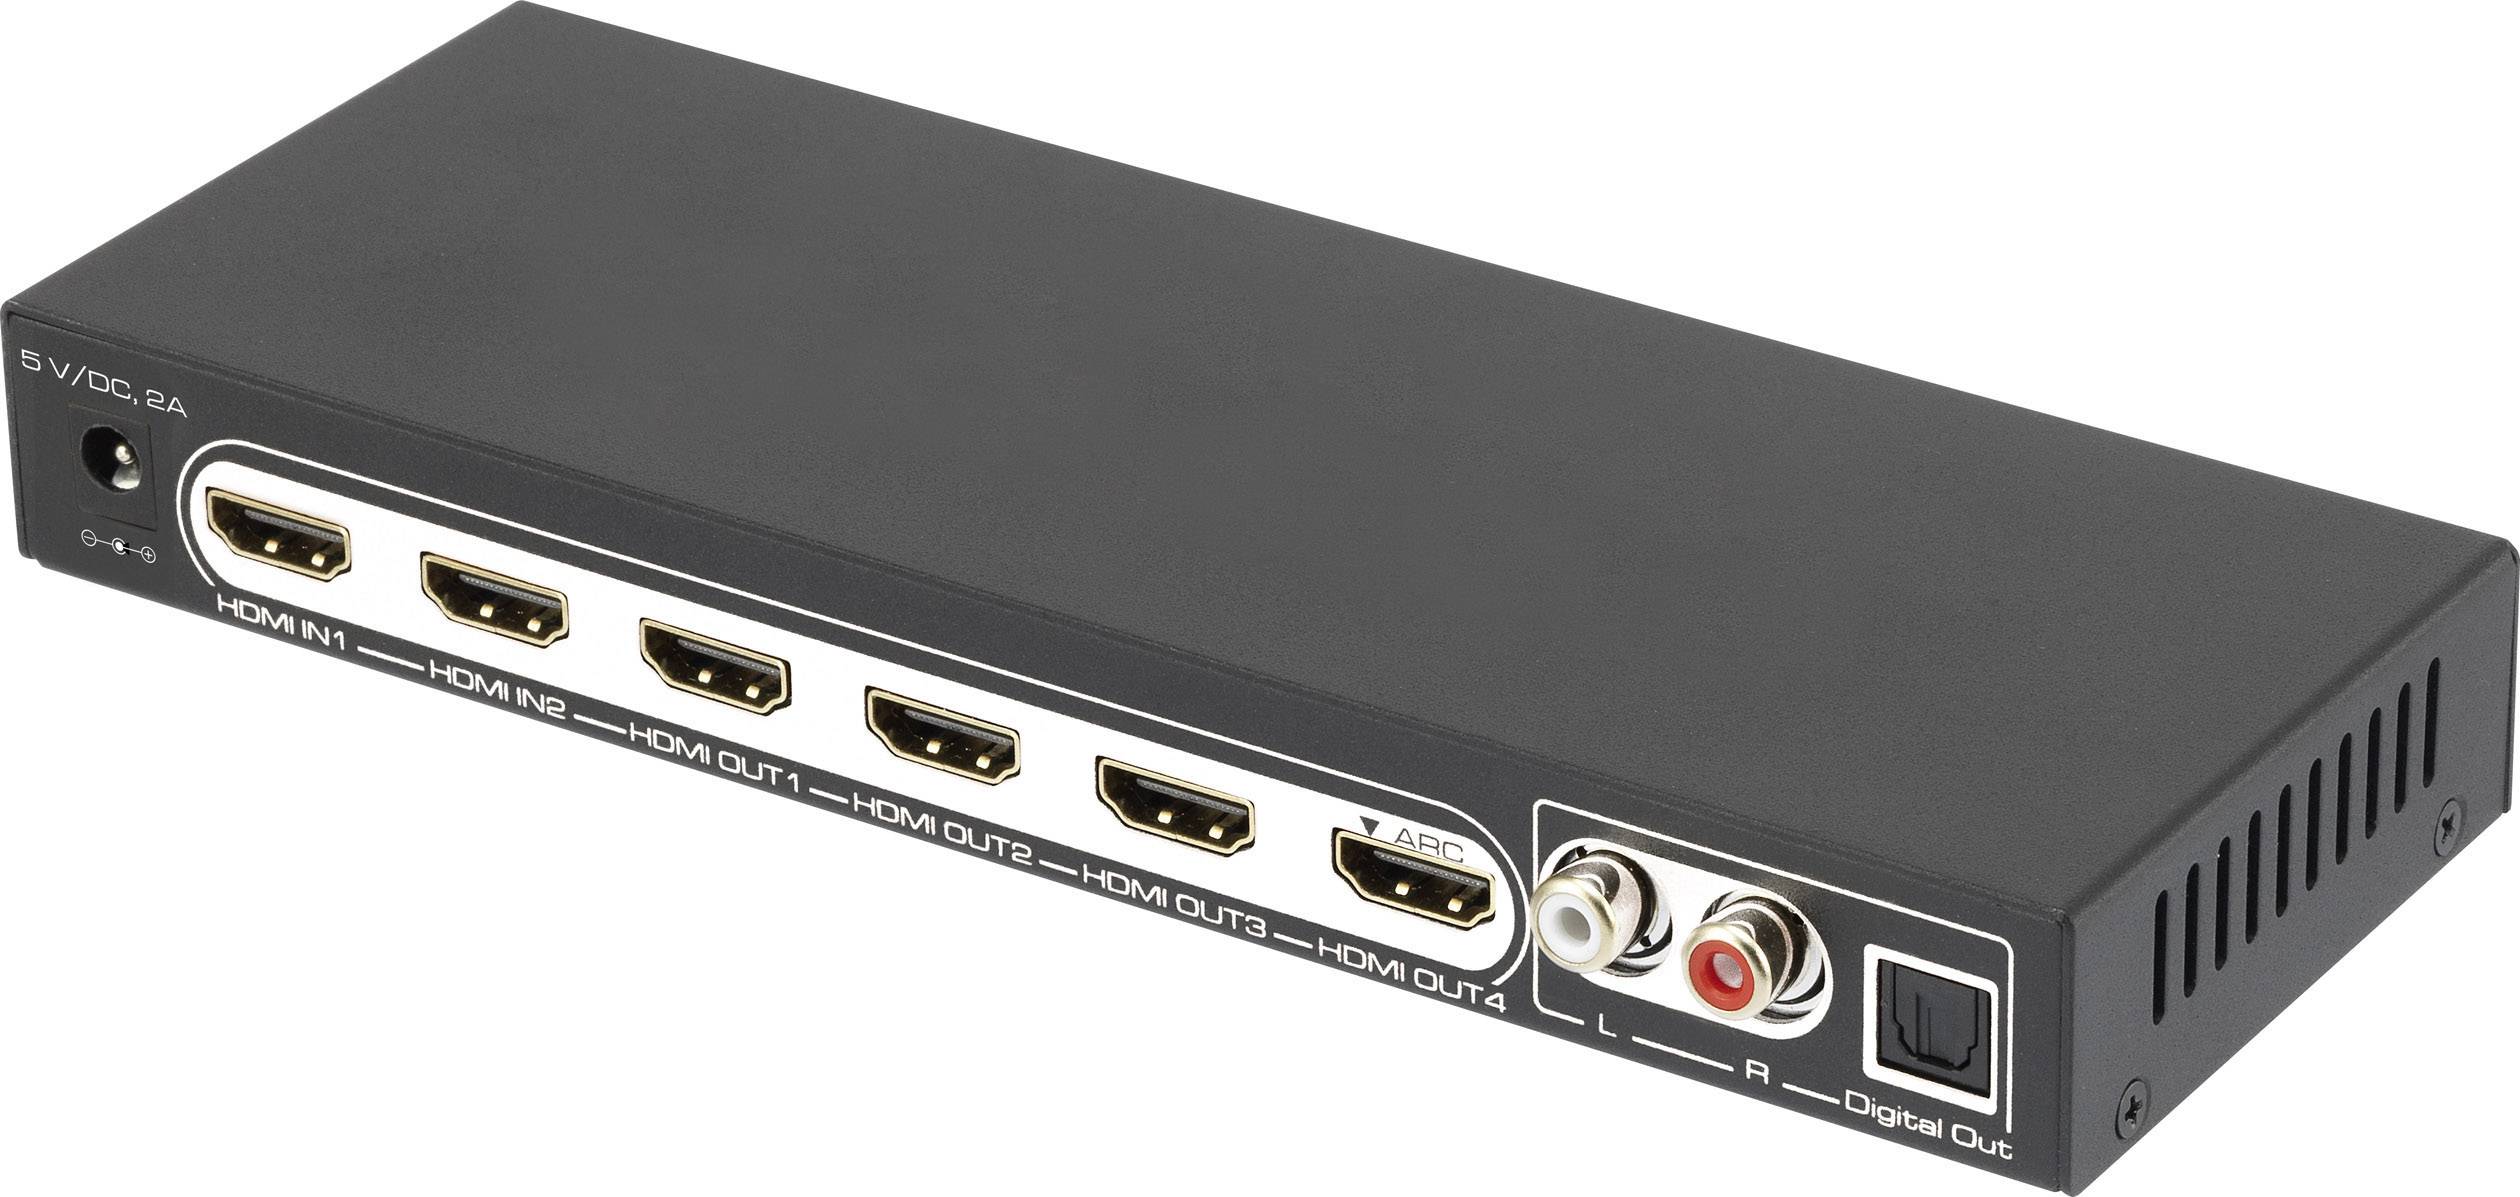 SpeaKa Professional 4 HDMI splitter + audio ports, + remote control 3840 x p Black | Conrad.com